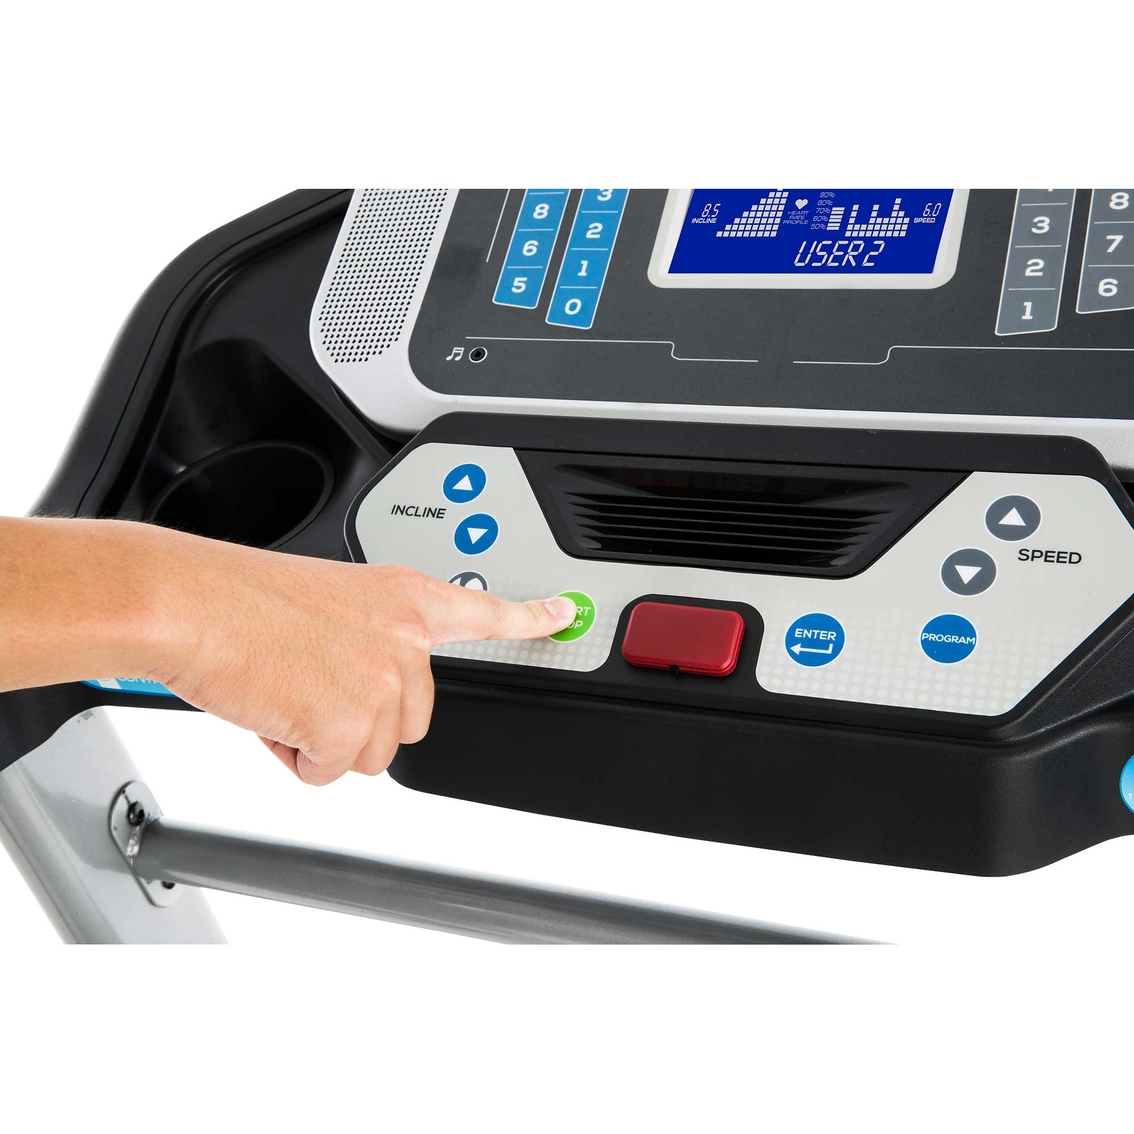 XTERRA Fitness TRX3500 Folding Treadmill - Image 9 of 10